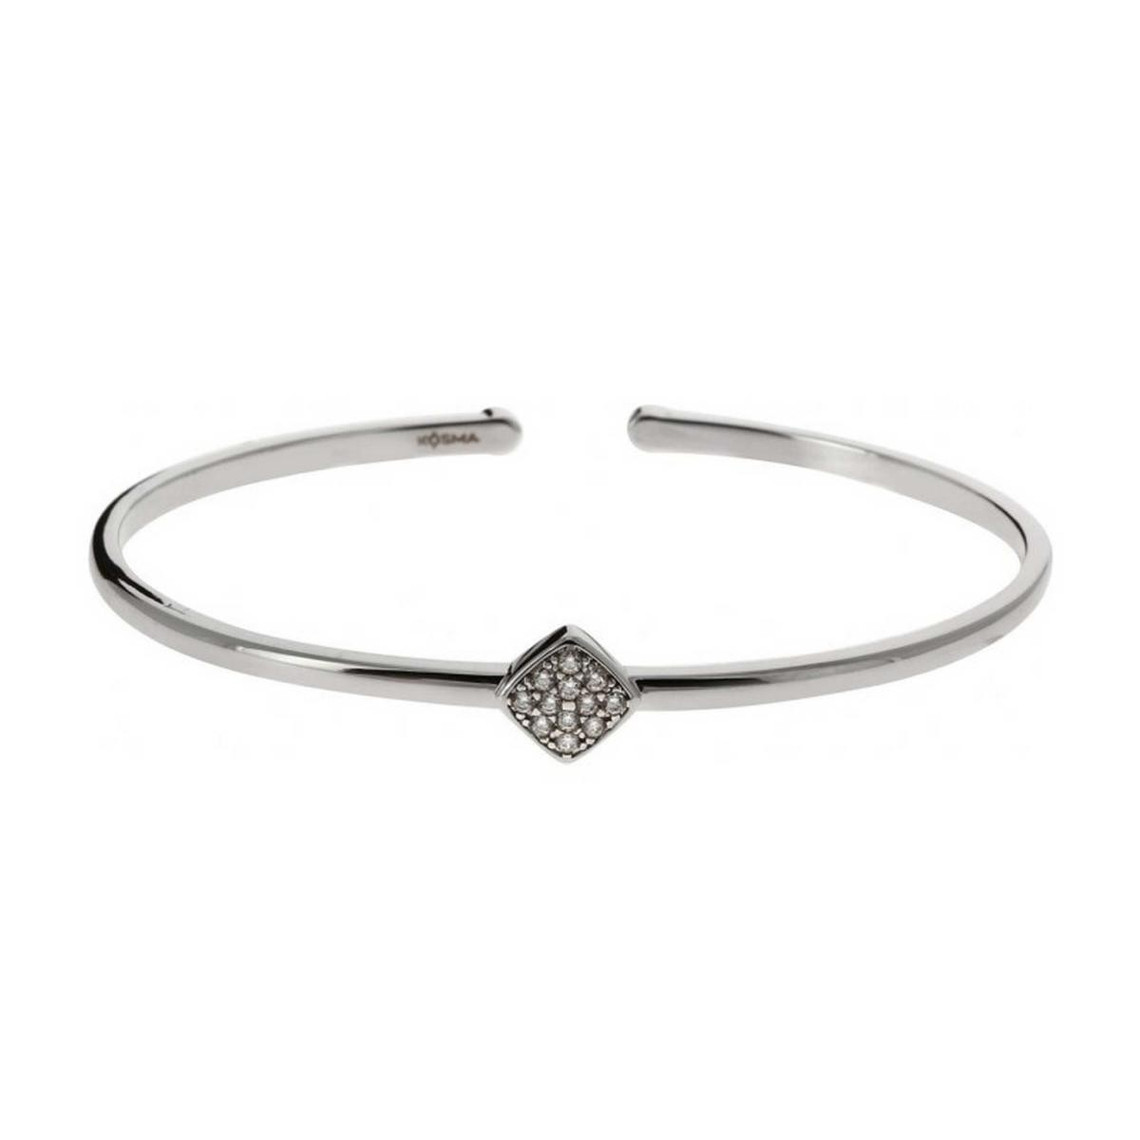 bracelet kosma ella jwbb00004-argent - métal argenté & cristaux femme